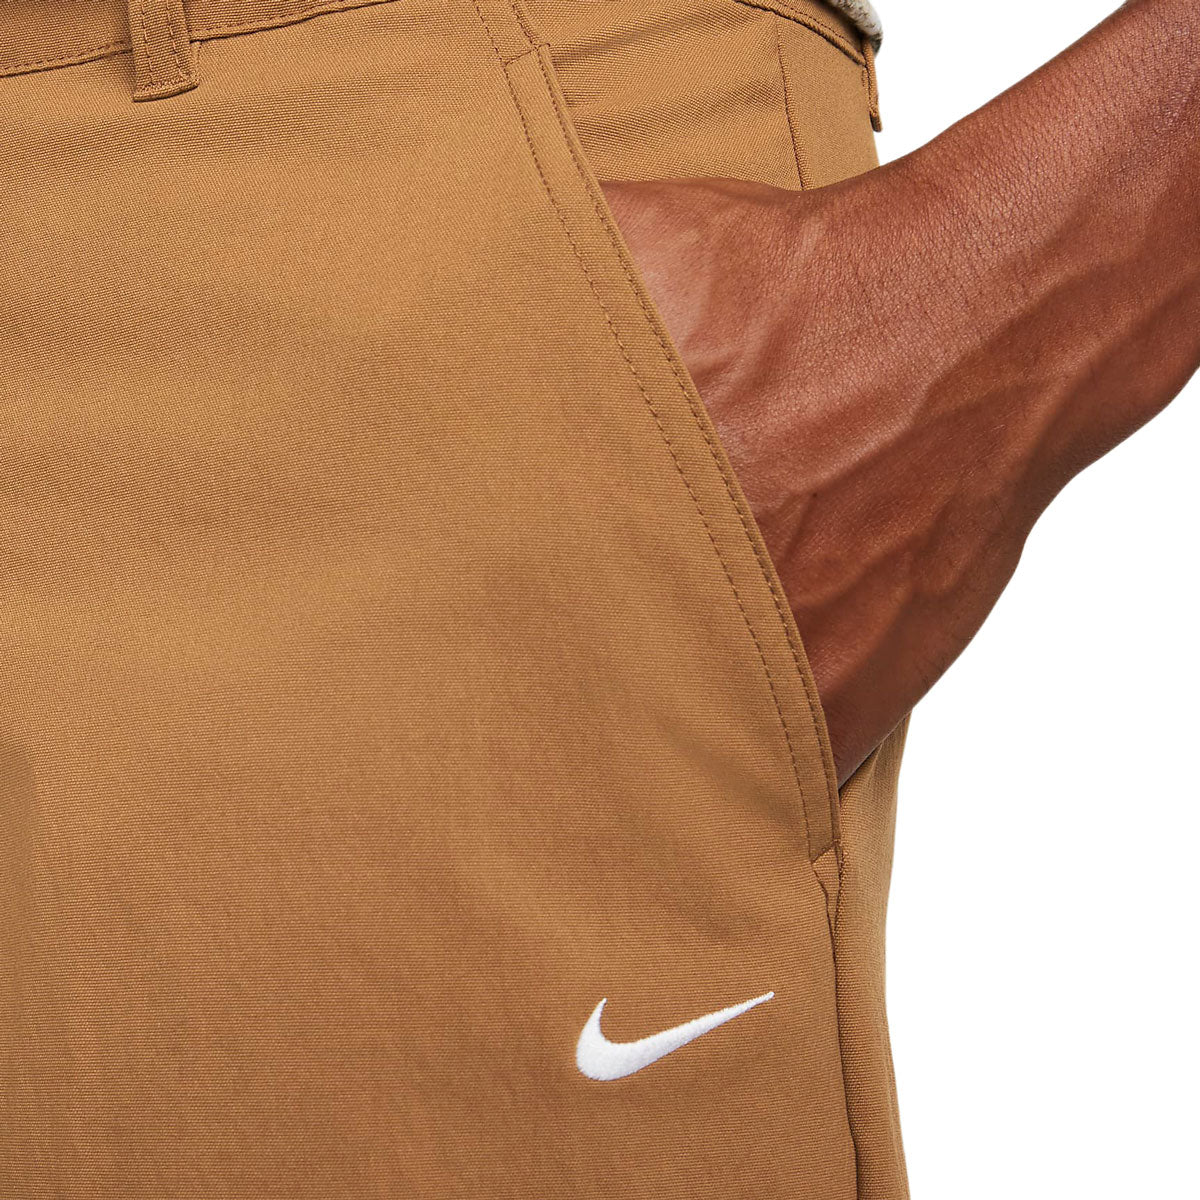 Nike SB Eco El Chino Pants - Ale Brown image 3